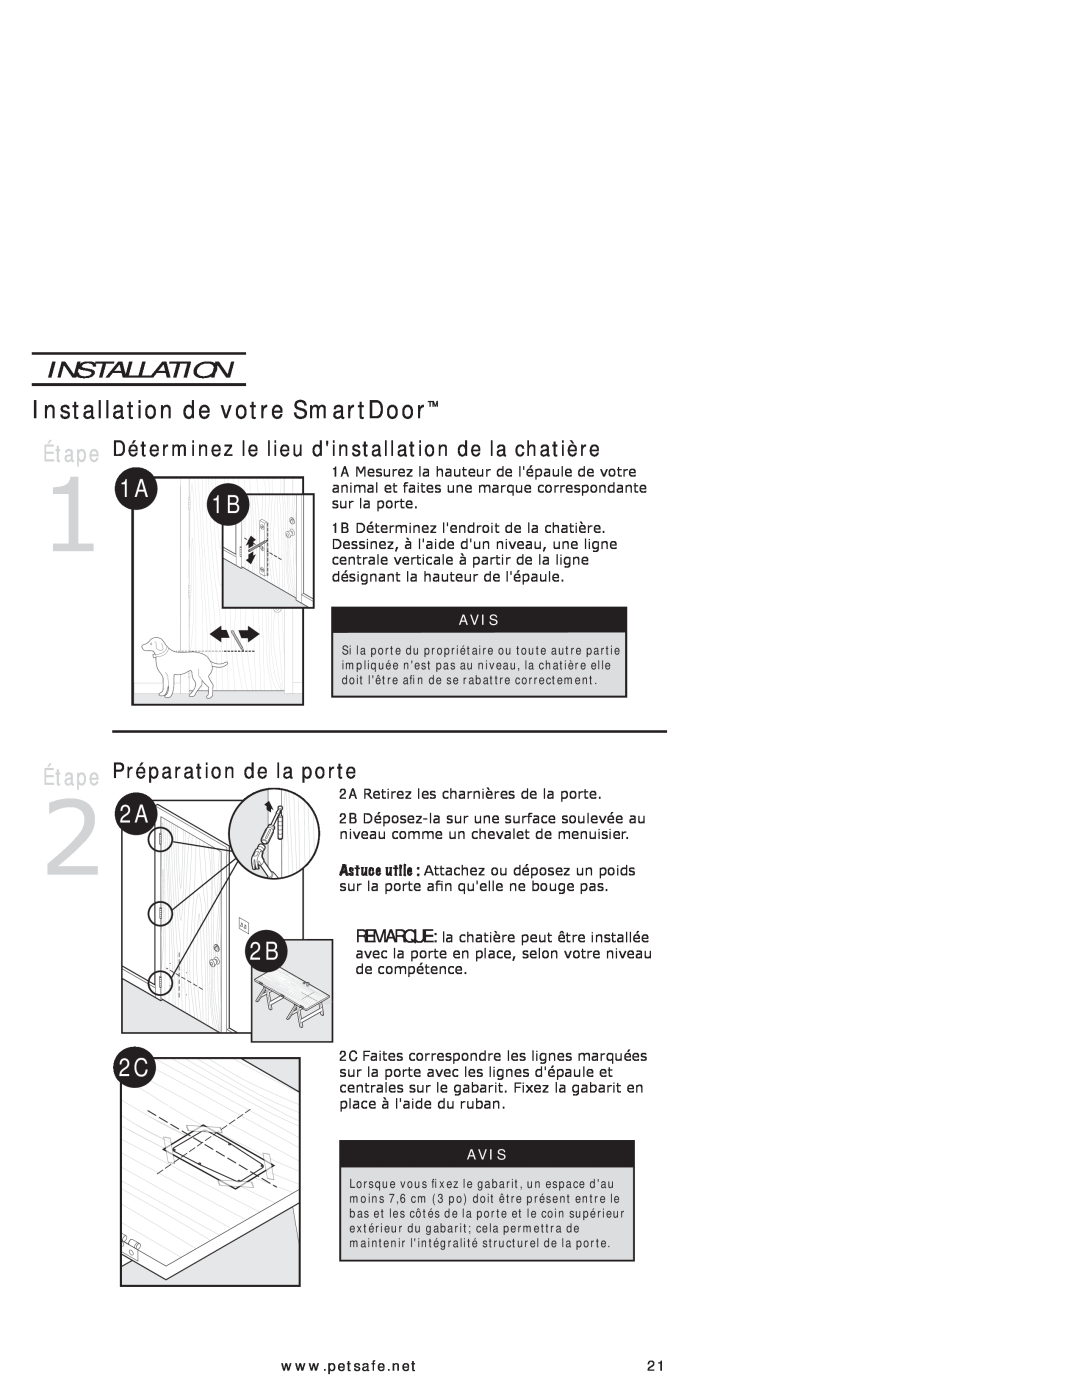 Petsafe PPA11-10709, PPA11-10711 manual Installation de votre SmartDoor, Étape Préparation de la porte, Avis 